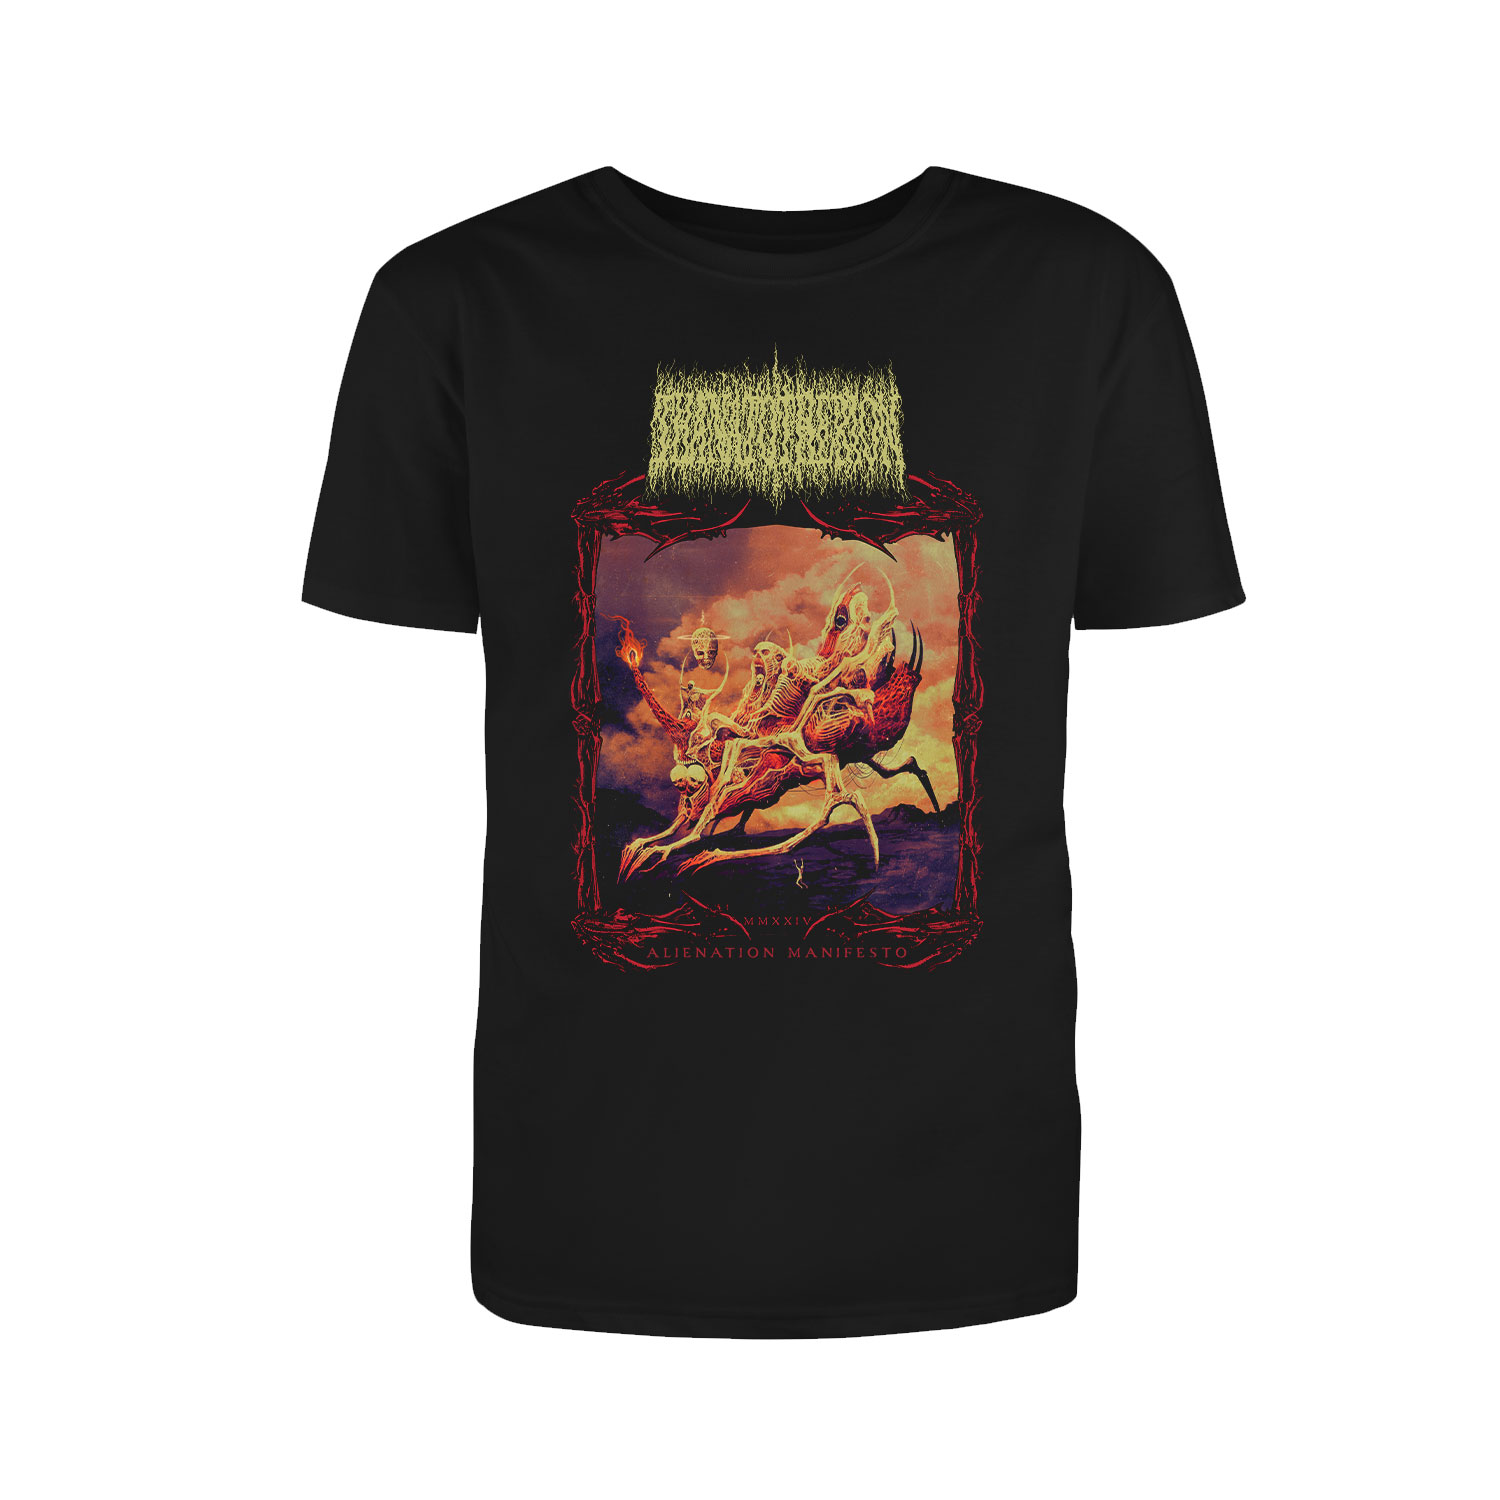 Thanatotherion - Alienation Manifesto T-Shirt